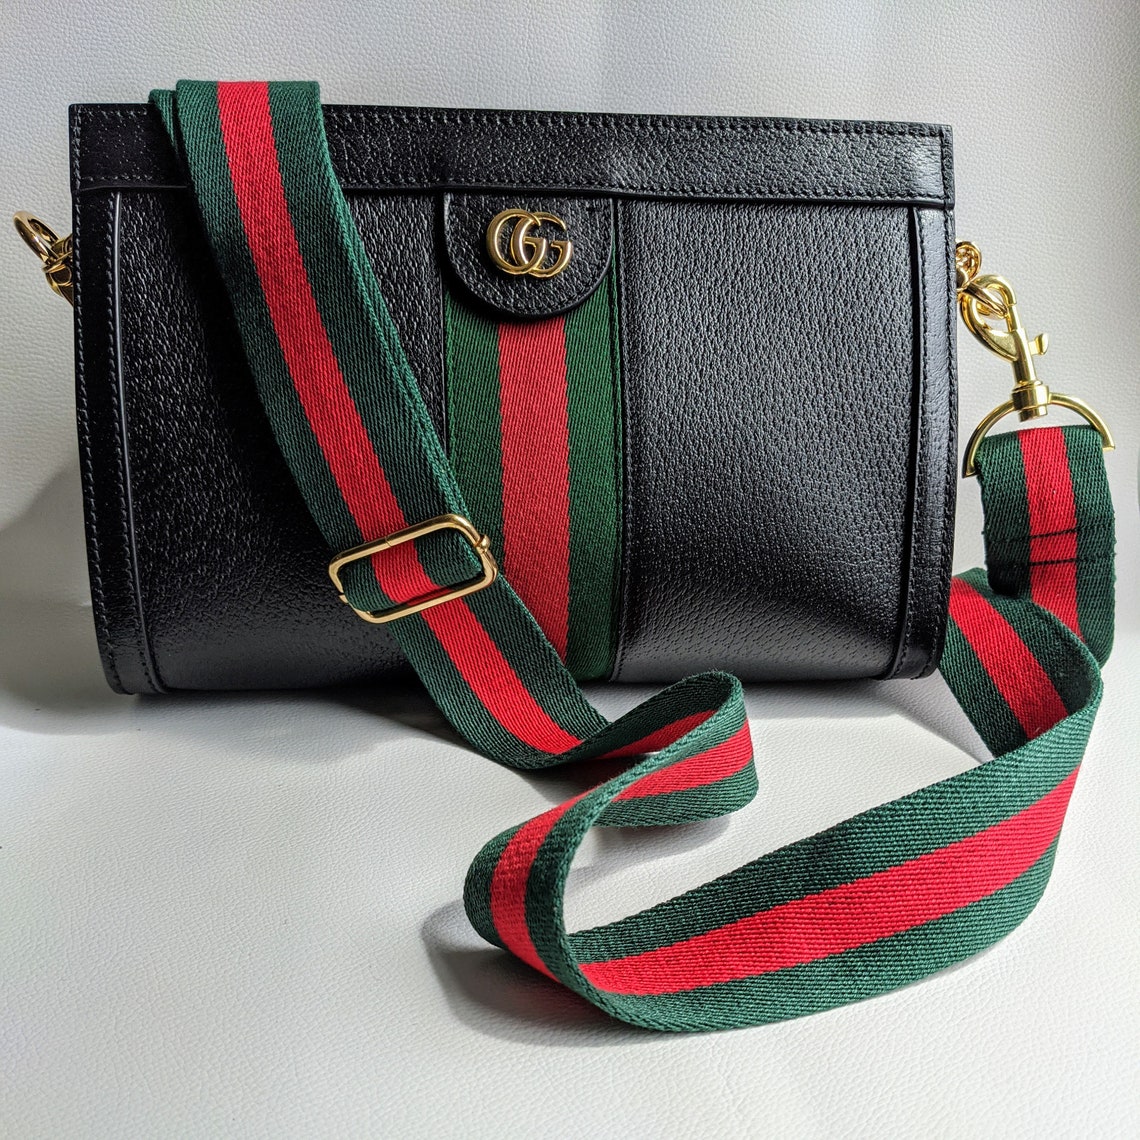 1.5 Guitar style bag purse strap Gucci Style Stripe | Etsy